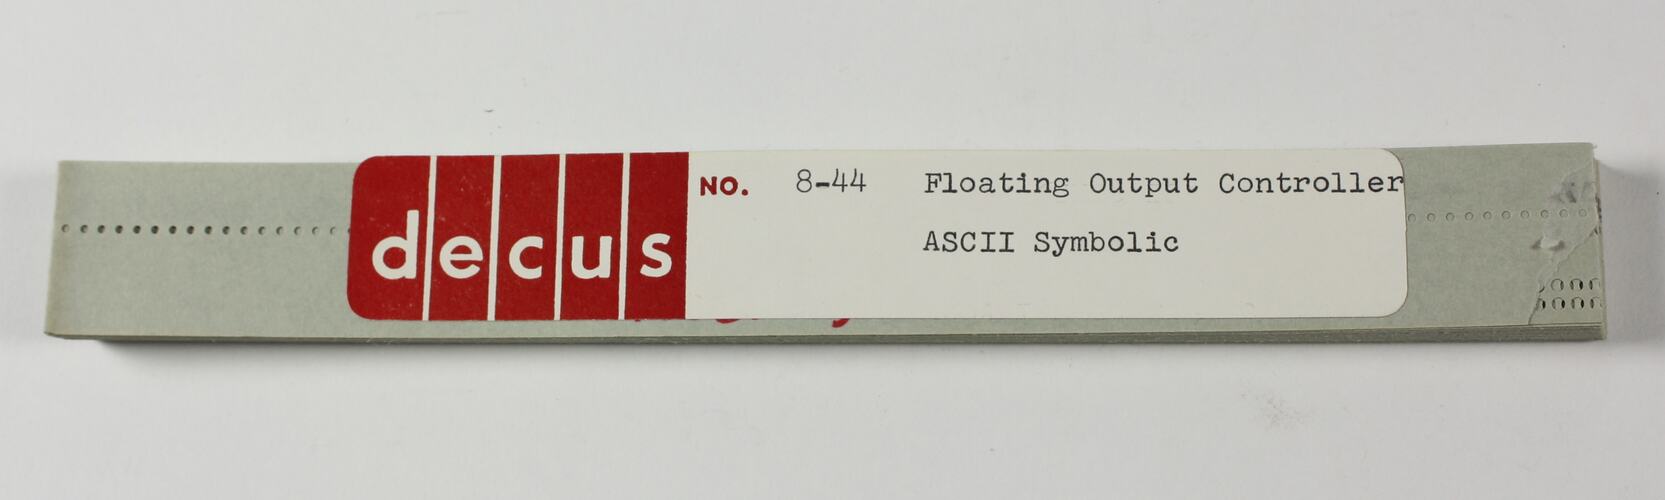 Paper Tape - DECUS, '8-44 Floating Output Controller, ASCII Symbolic'